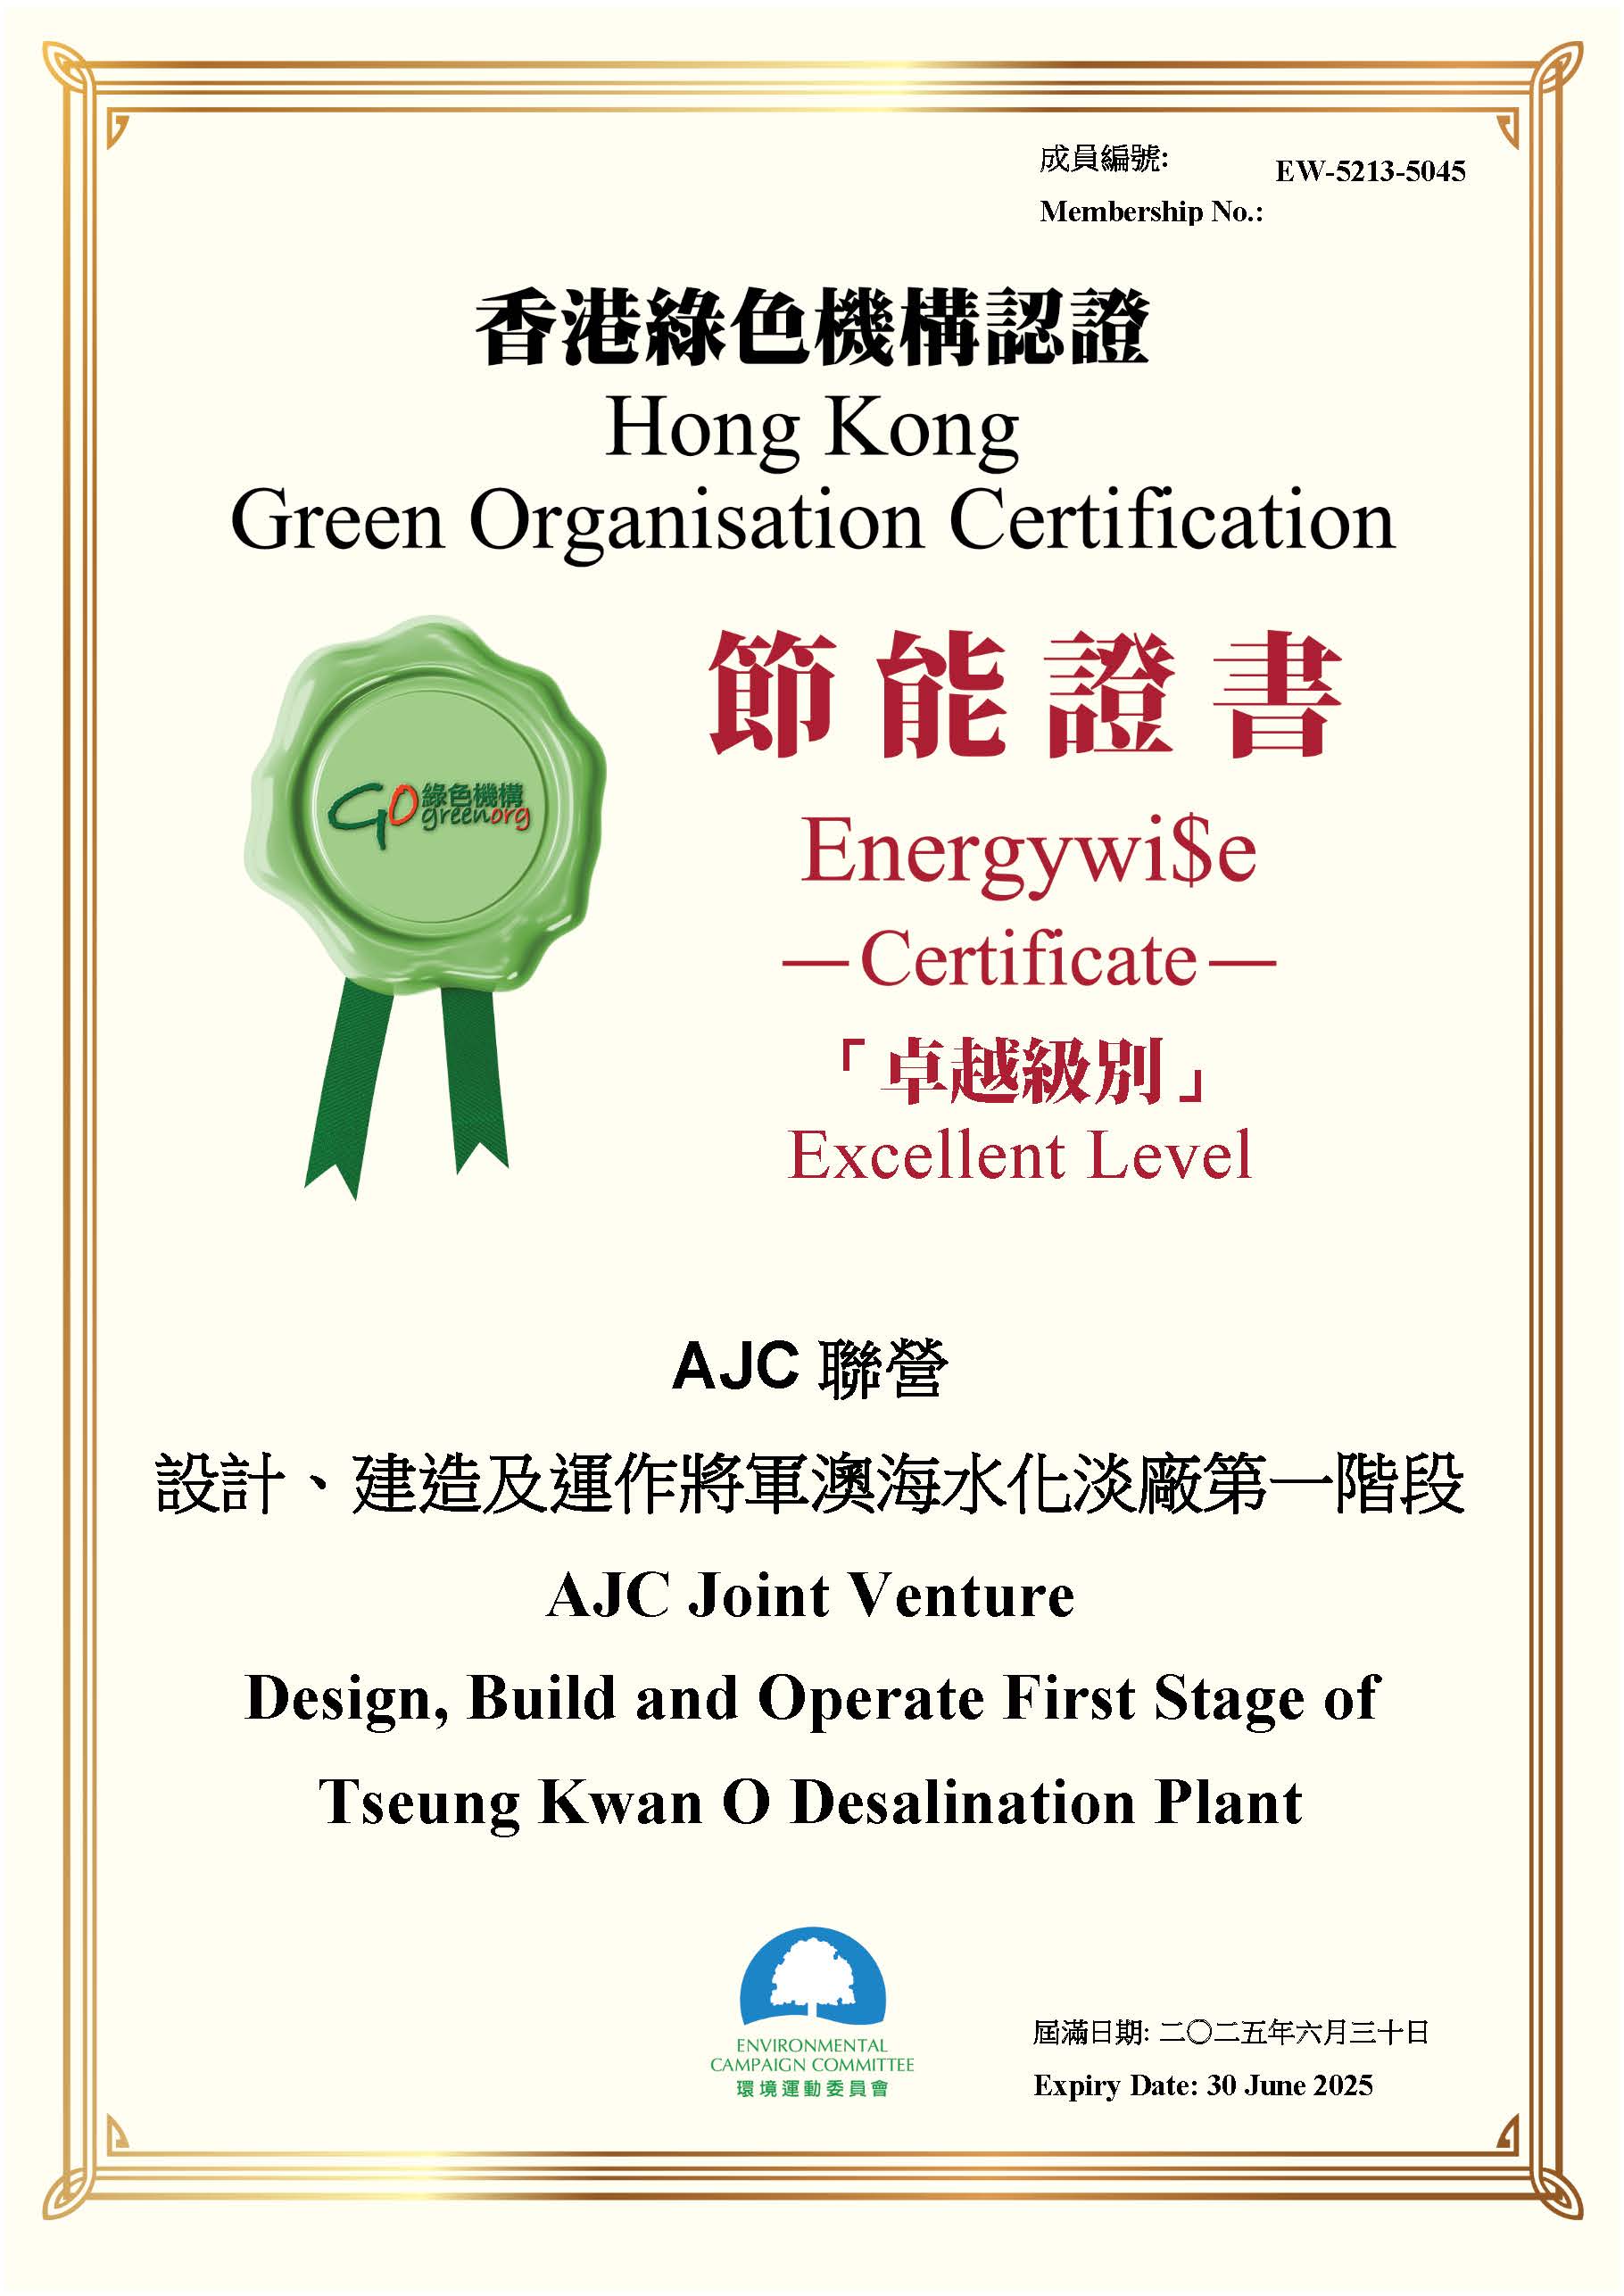 Hong Kong Green Organization Certification<br/>Energywi$e Certificate